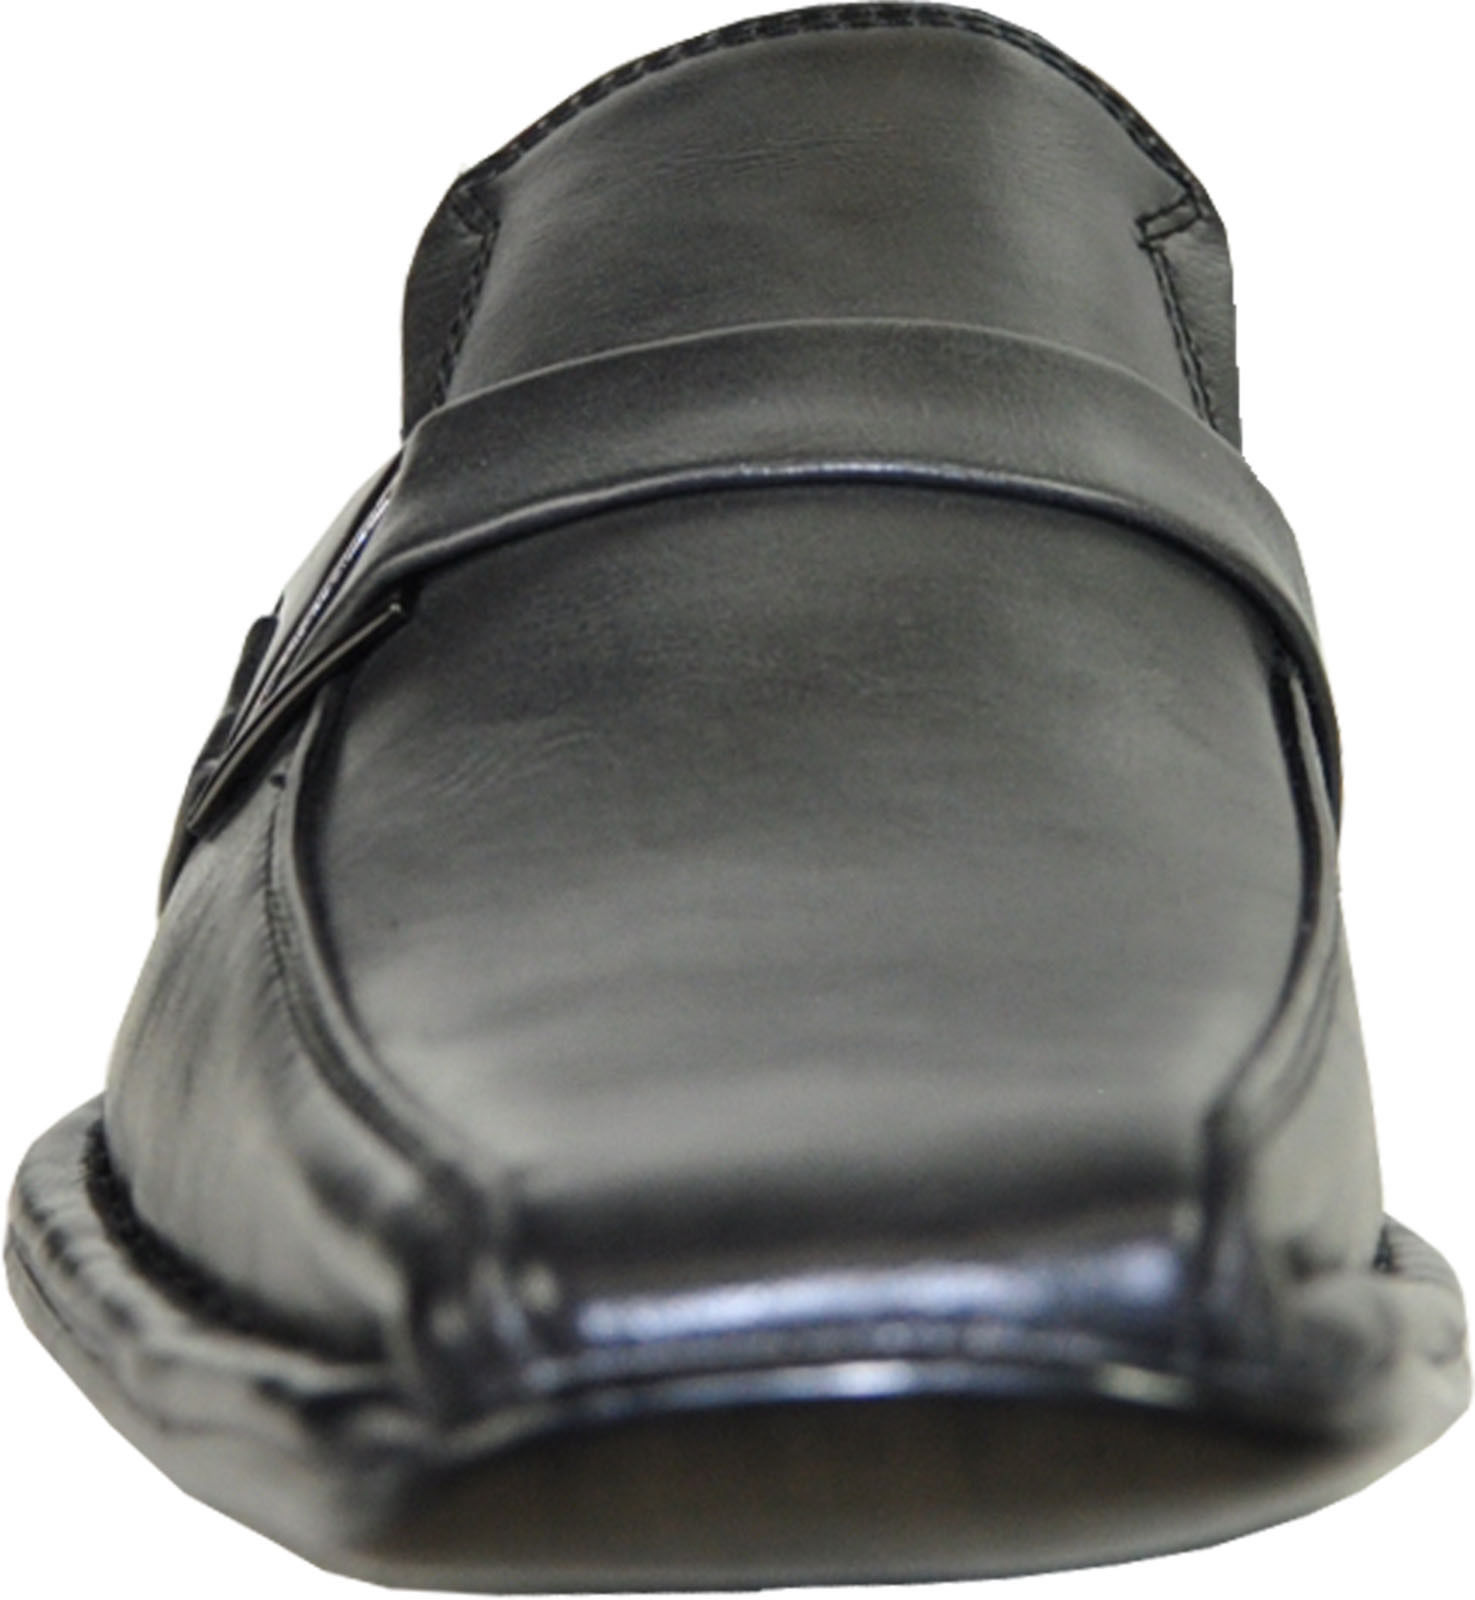 CORONADO MARINO-3 Dress Shoe Classic Point Bicycle Toe with Leather Lining Black (9 D(M) US) - image 2 of 7